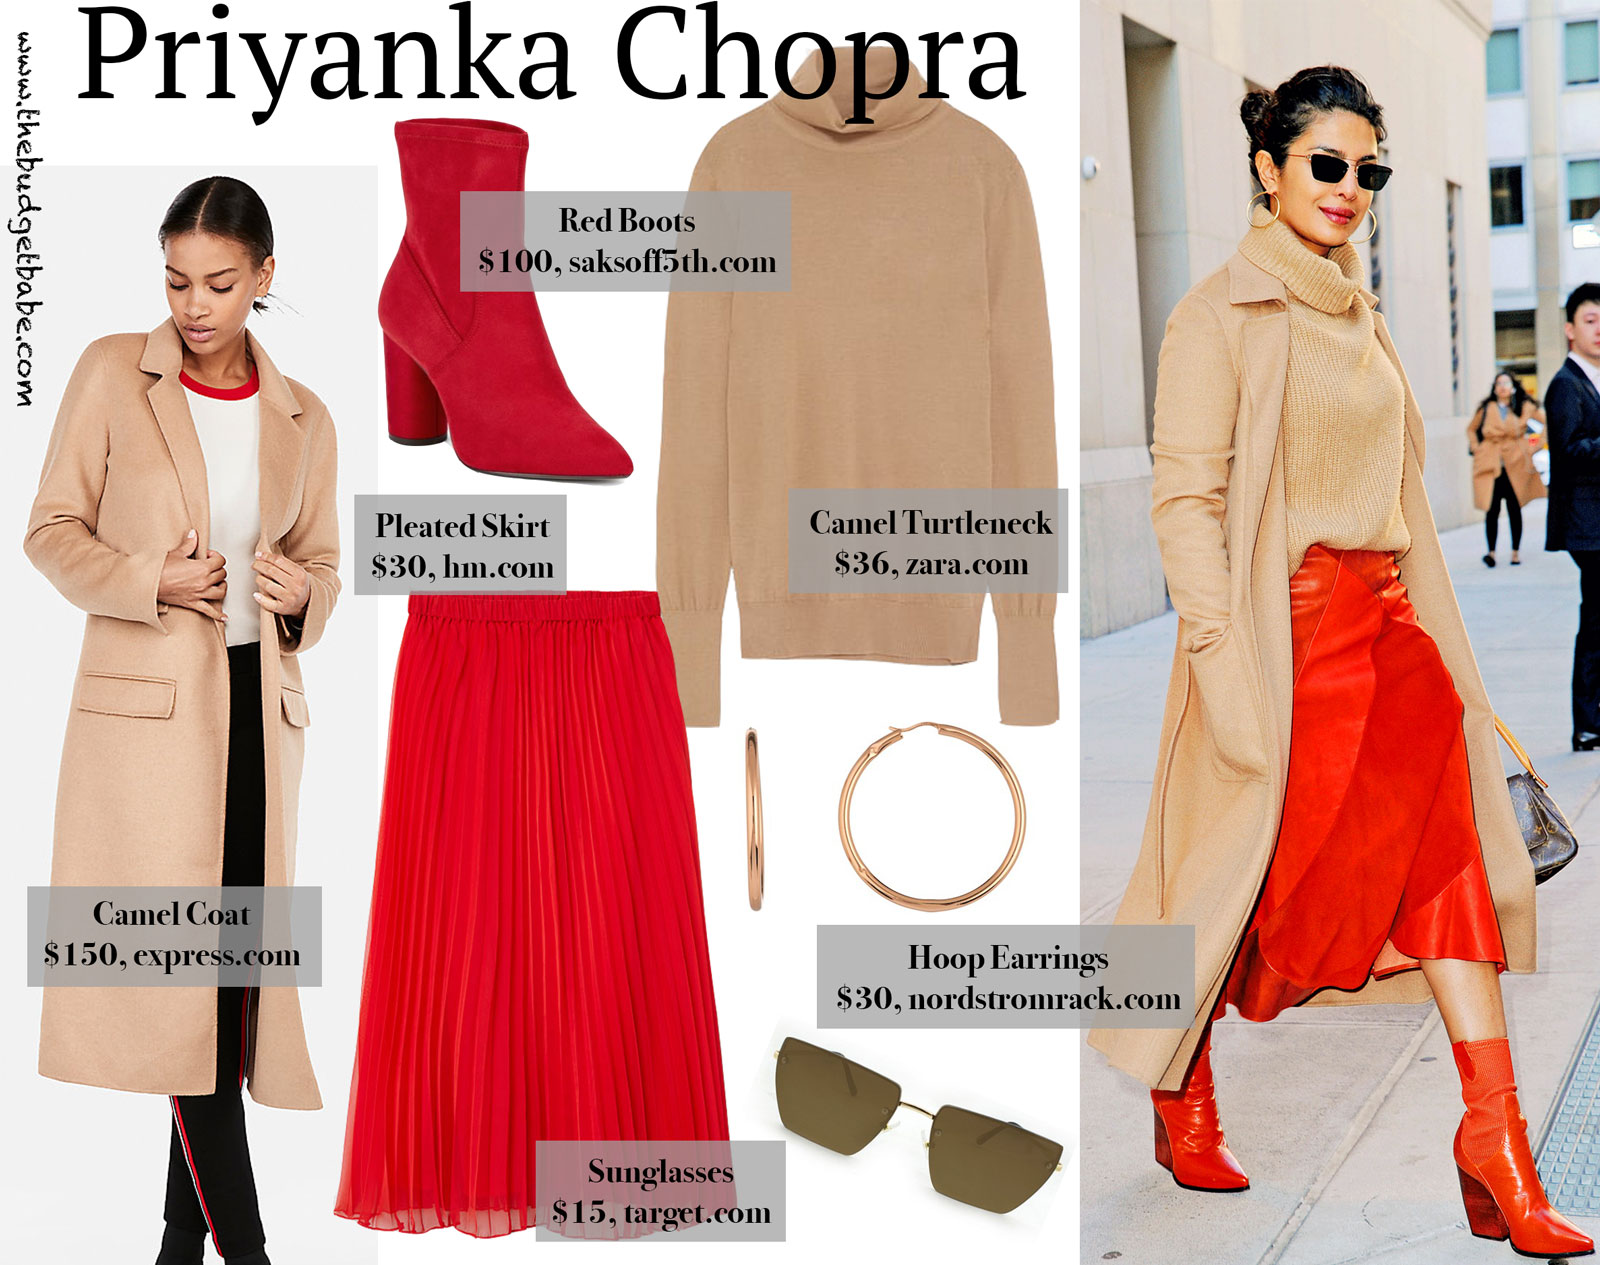 Priyanka Chopra Red Skirt and Camel Coat Look for Less